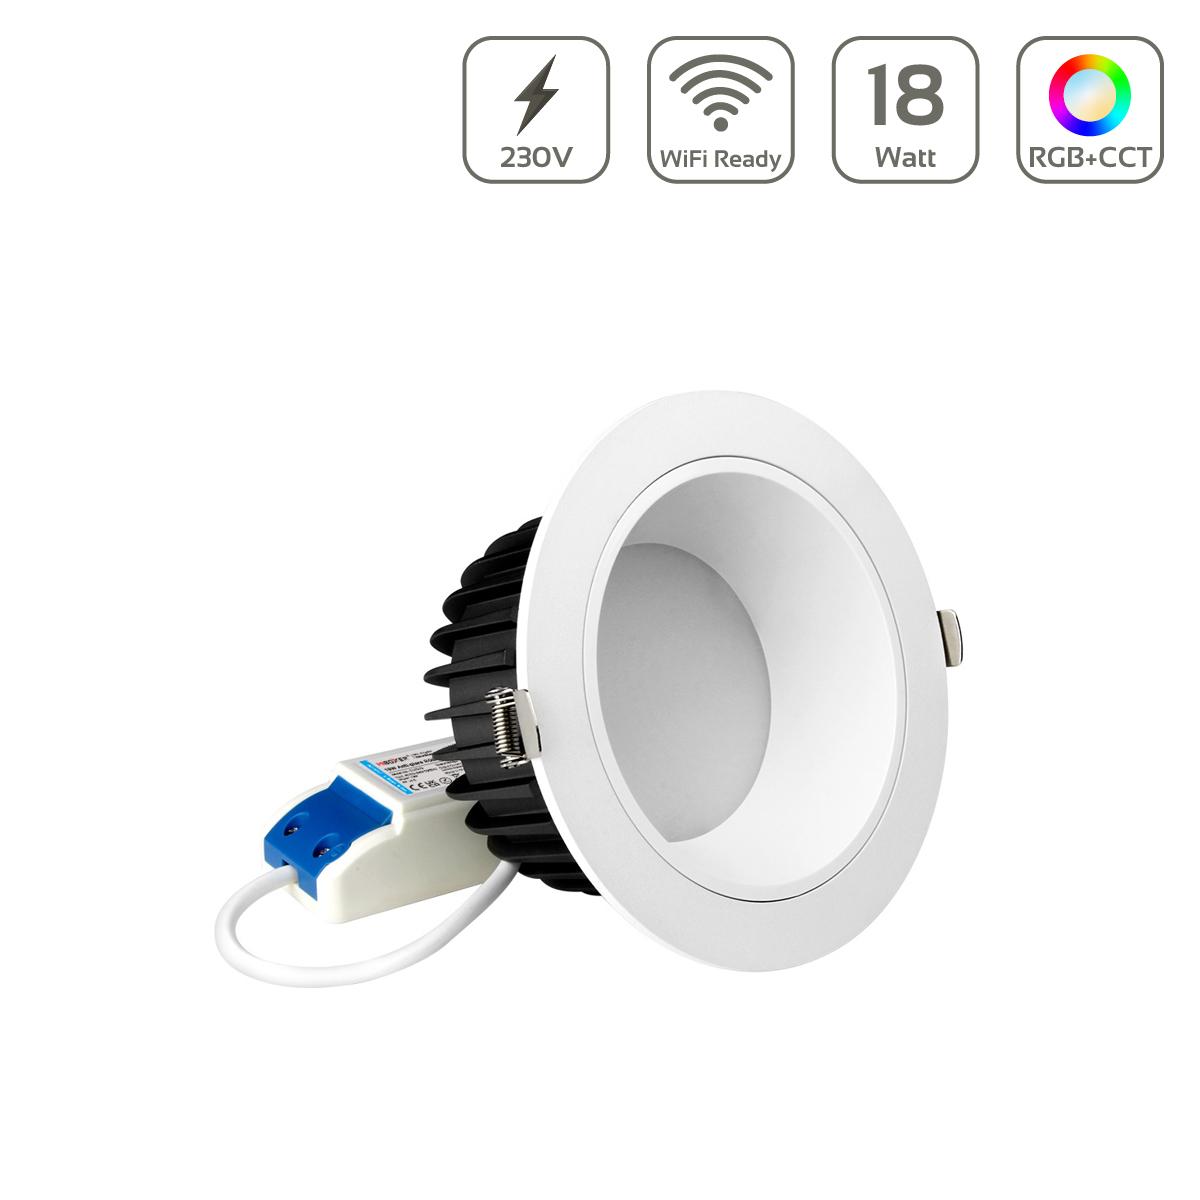 MiBoxer RGB+CCT LED Einbaustrahler Reflector rund weiss 18W Ø140mm 2.4GHz WiFi ready FUT072